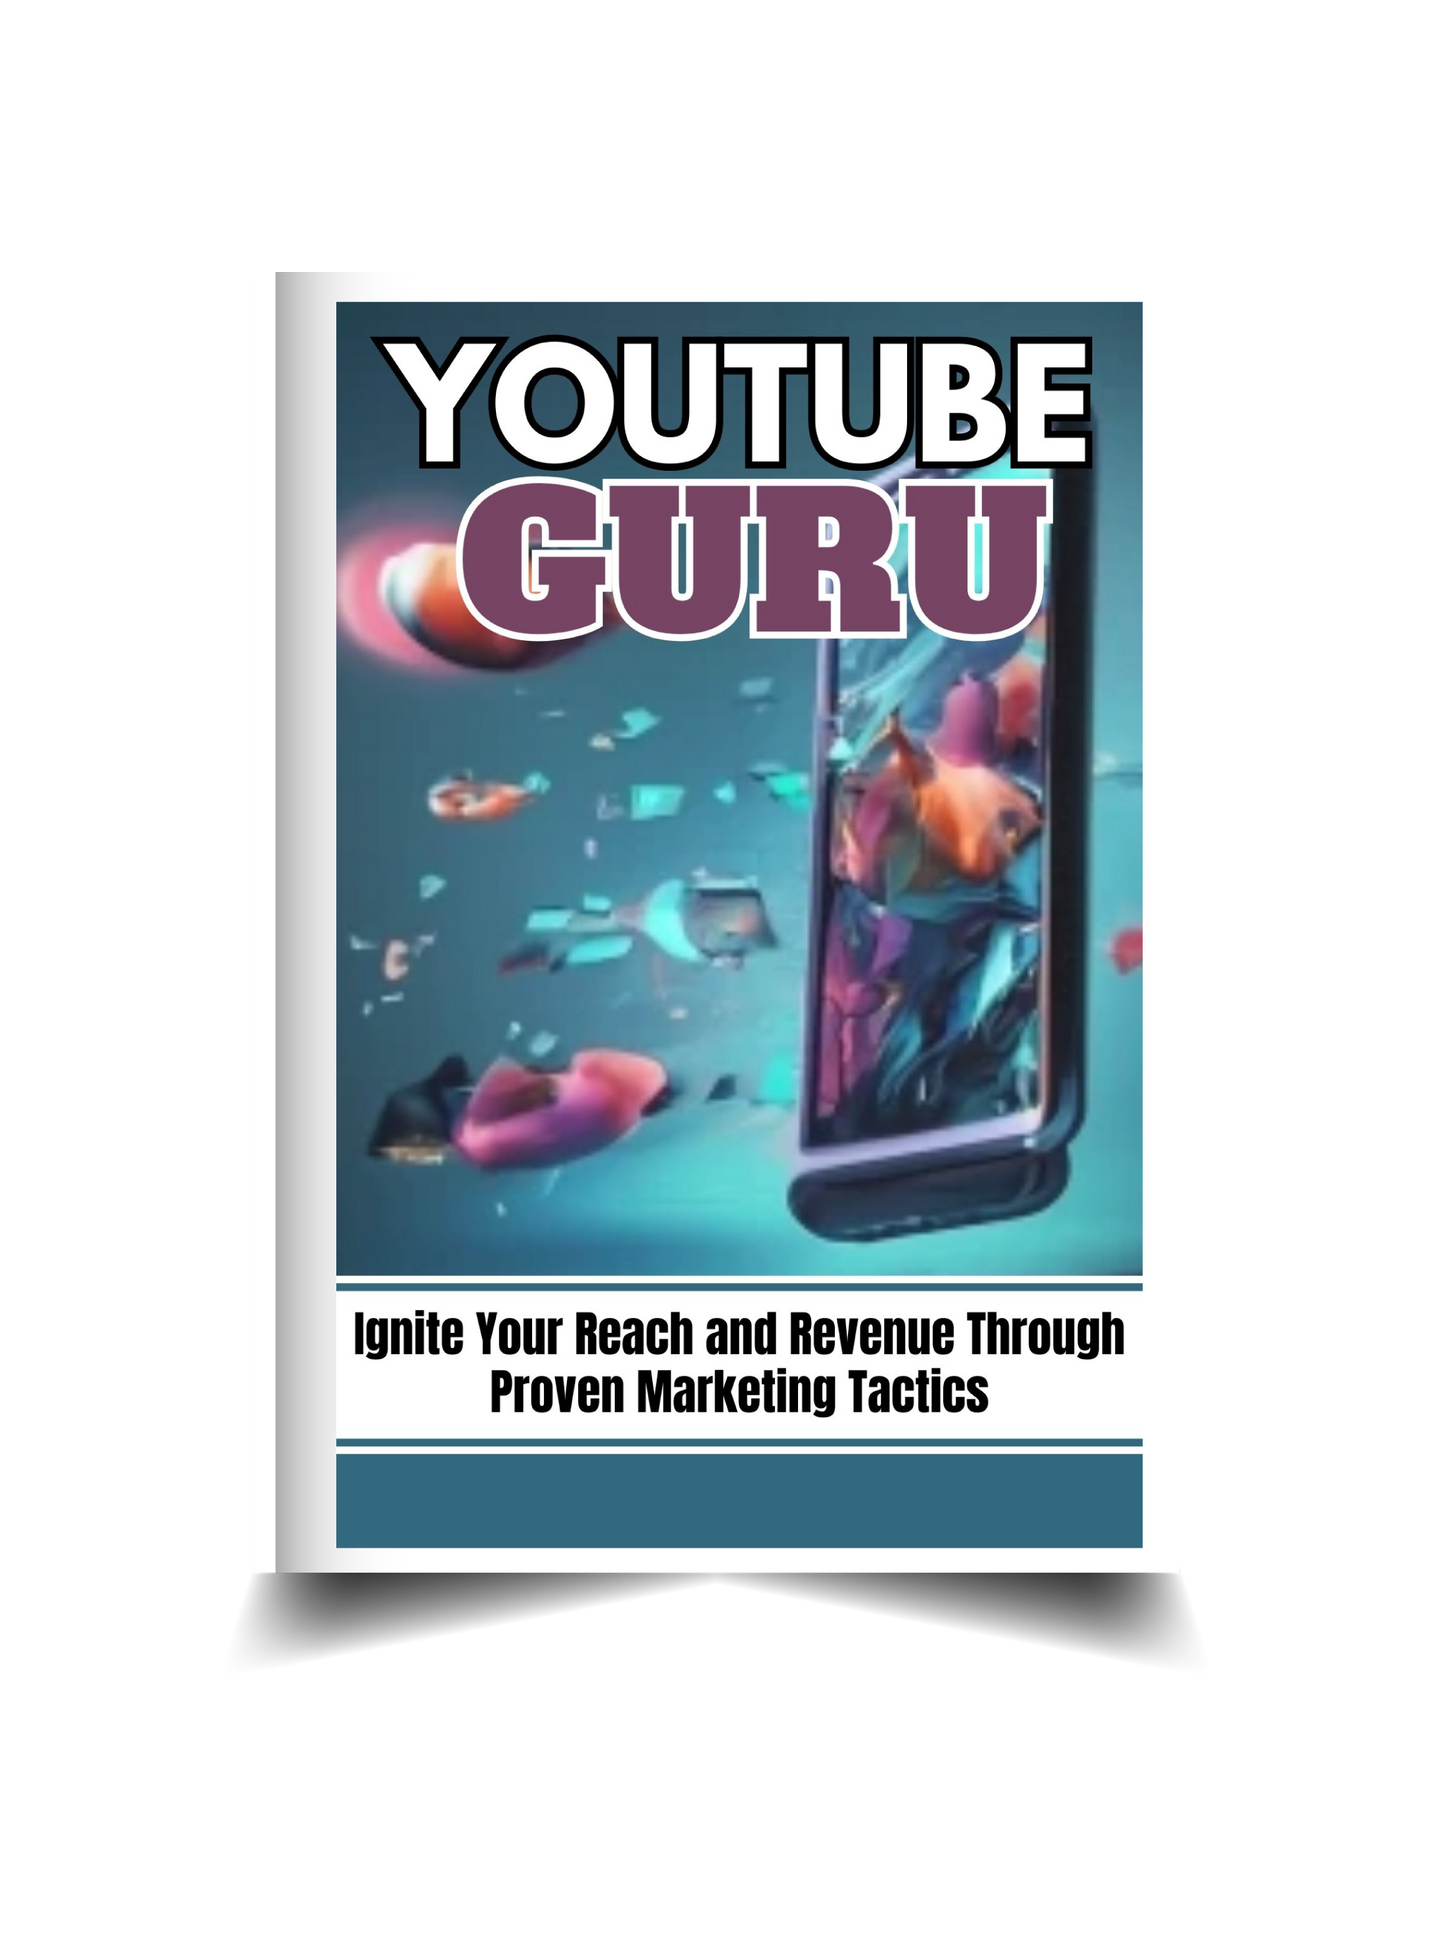 YouTube Guru: Ignite Your Reach and Revenue Through Proven Marketing Tactics